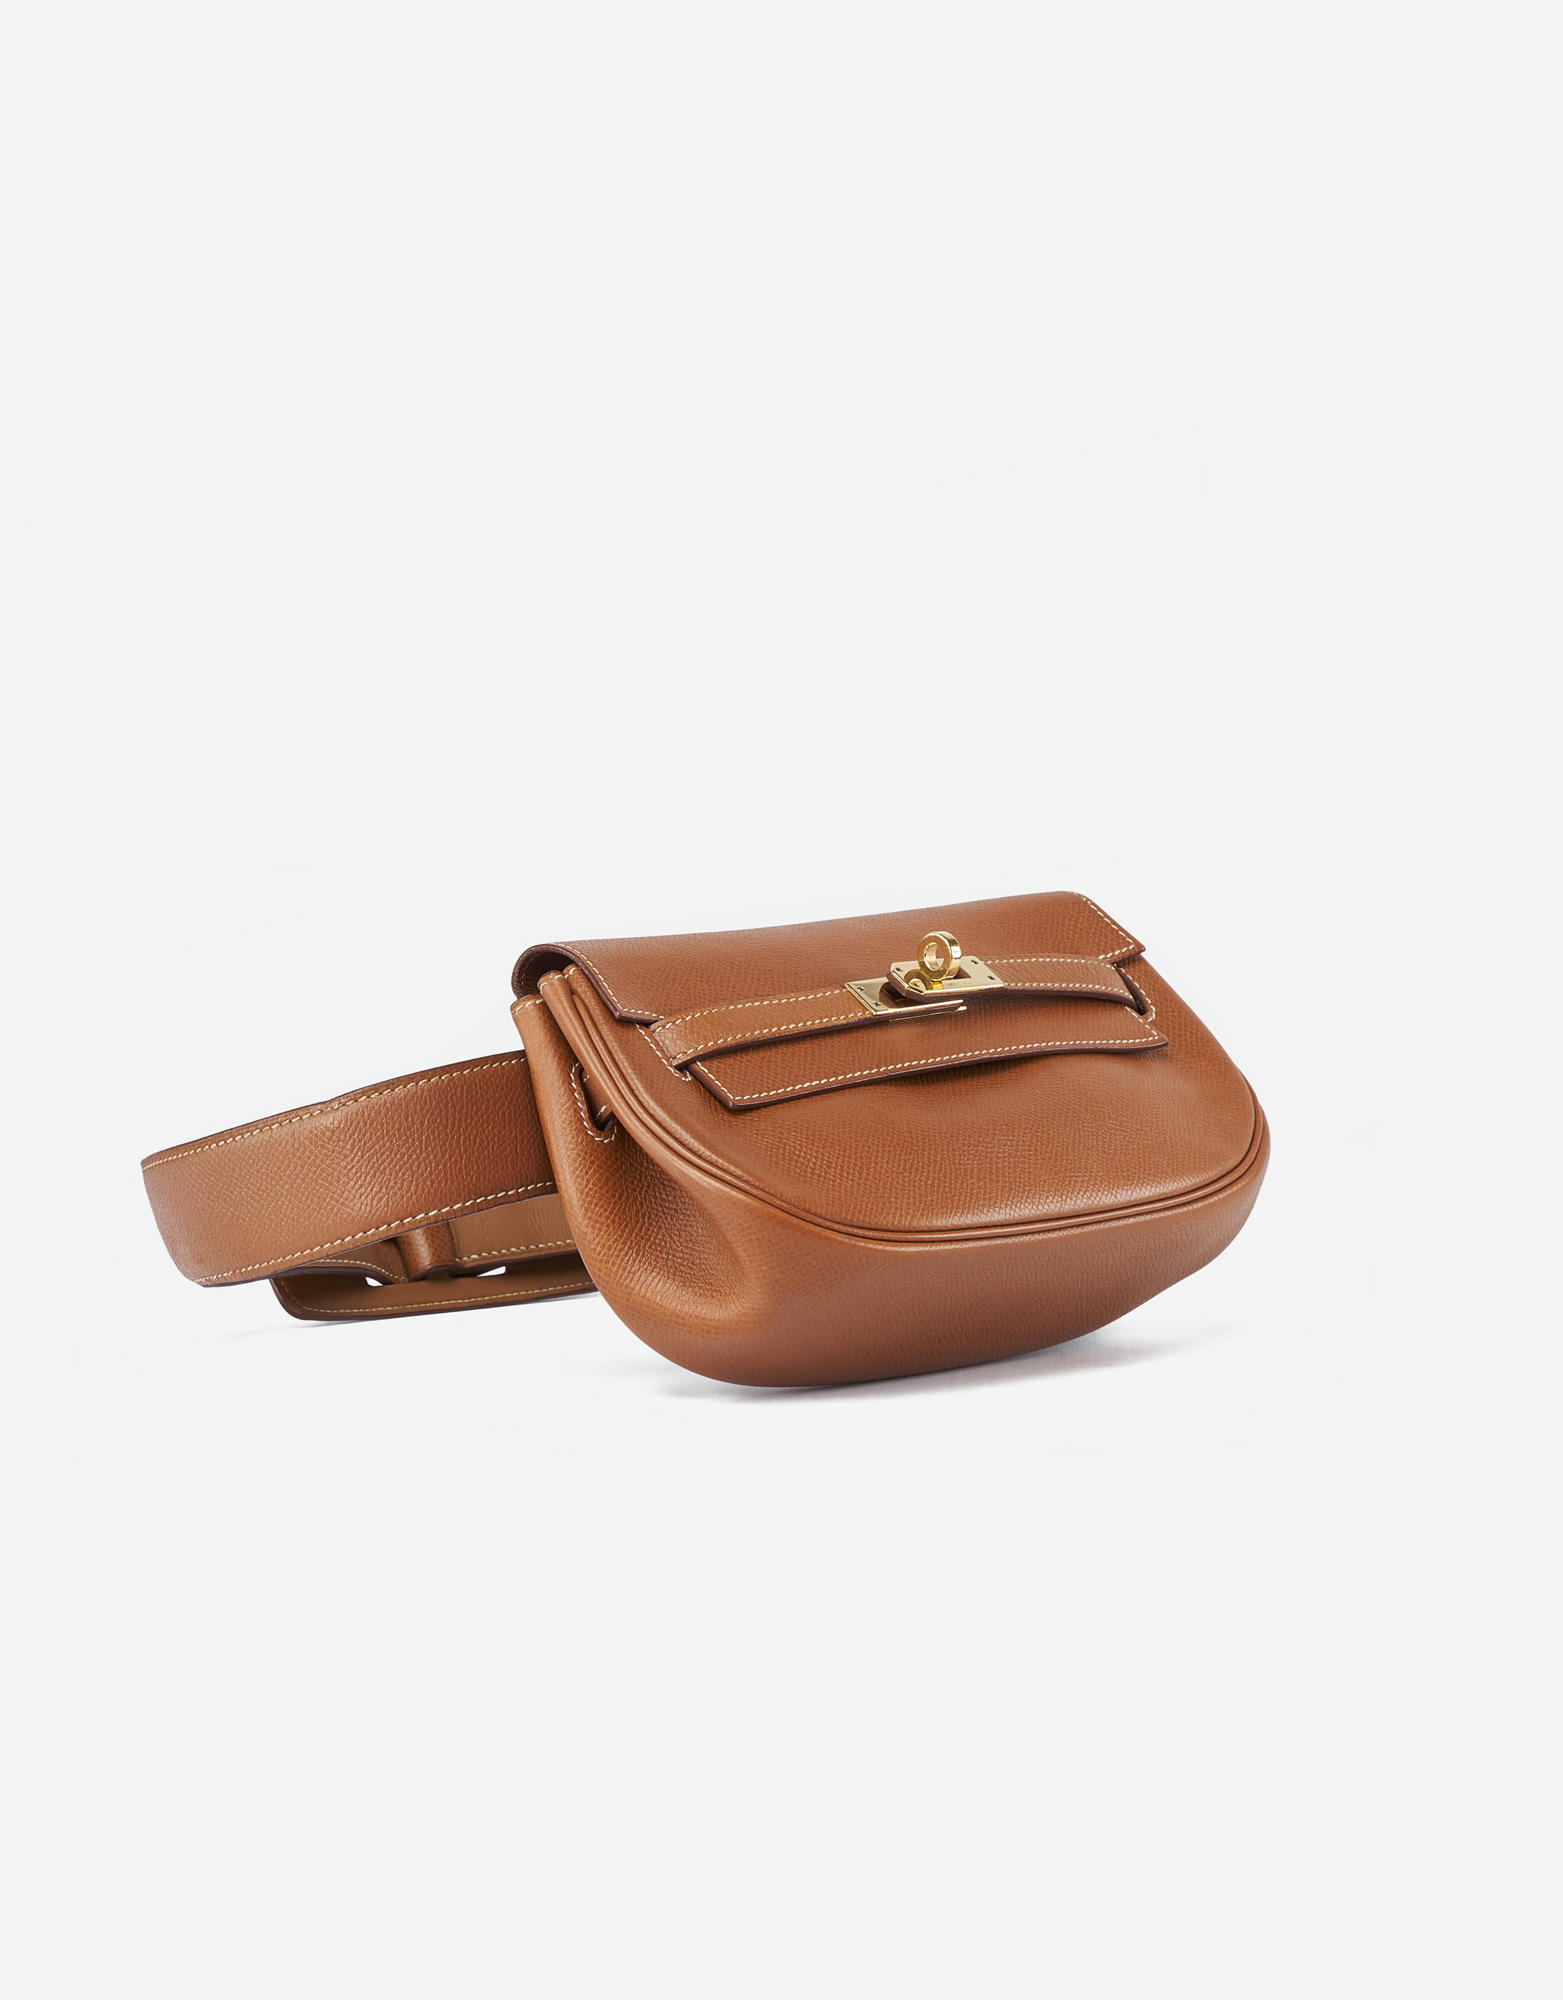 Hermès Kelly Belt Bag Courchevel Gold SACLÀB